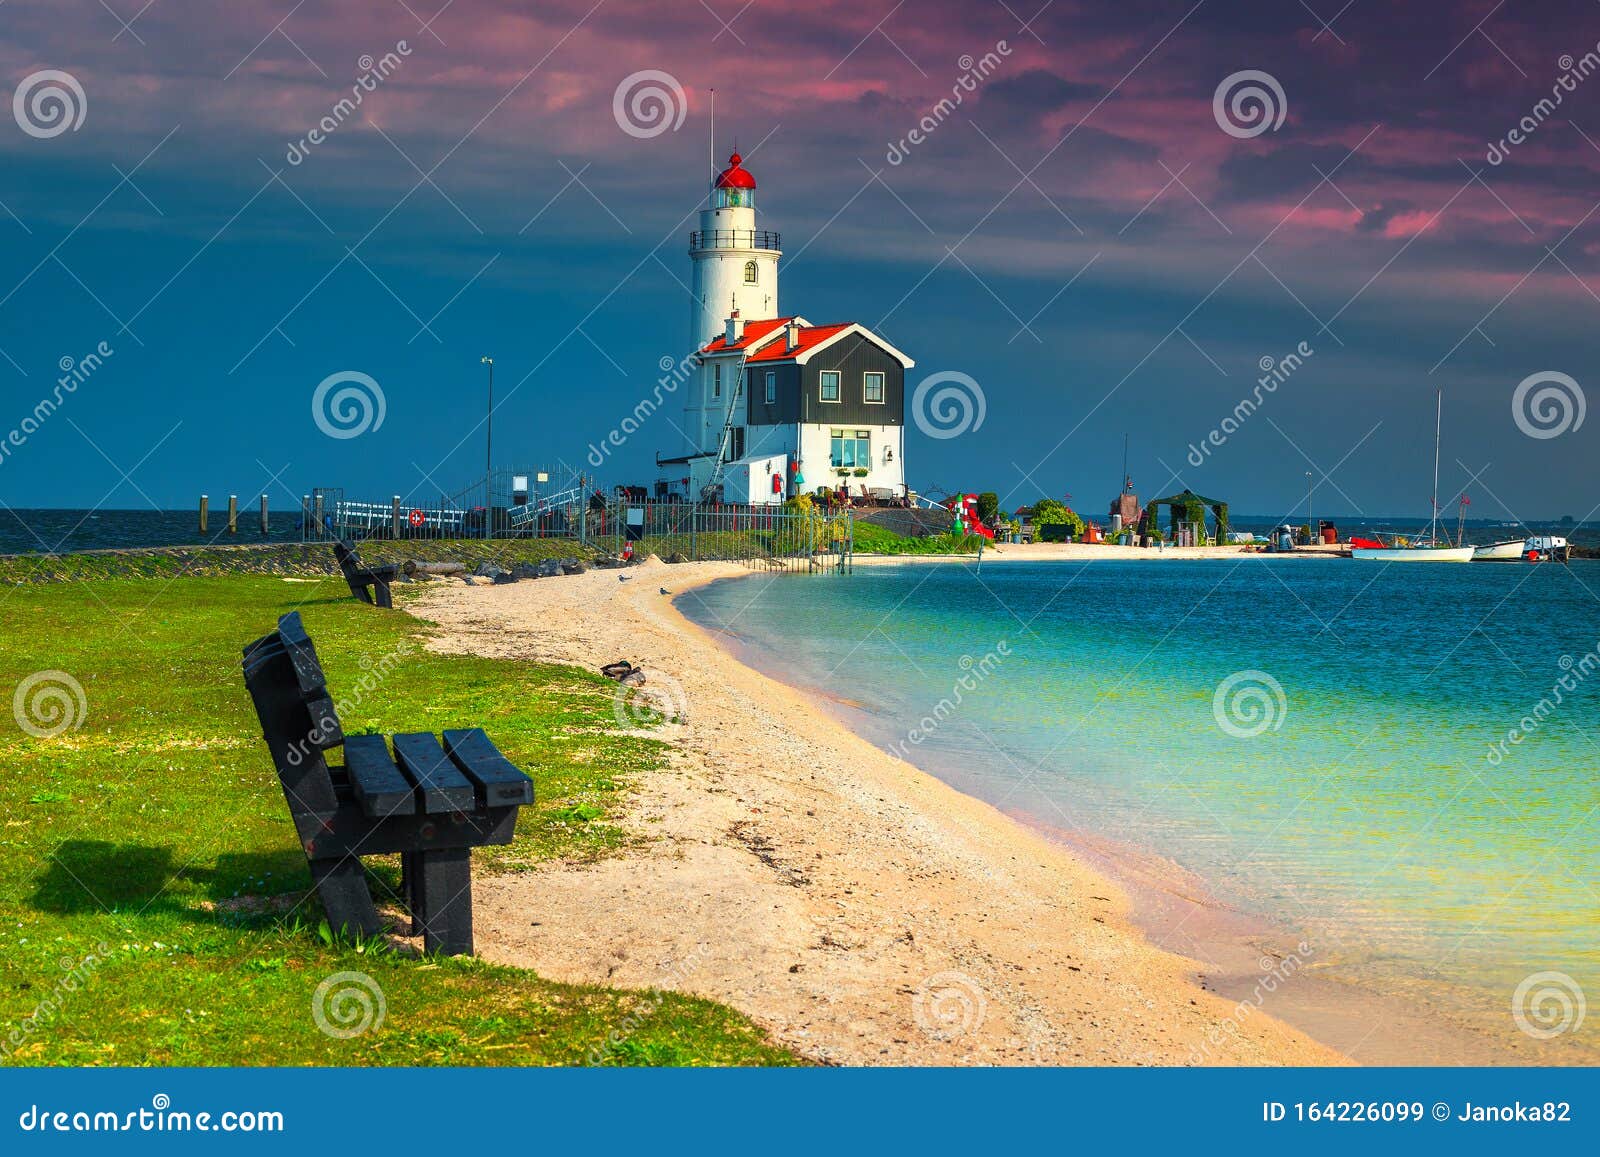 old spectacular lighthouse on the seashore, marken, netherlands, europe